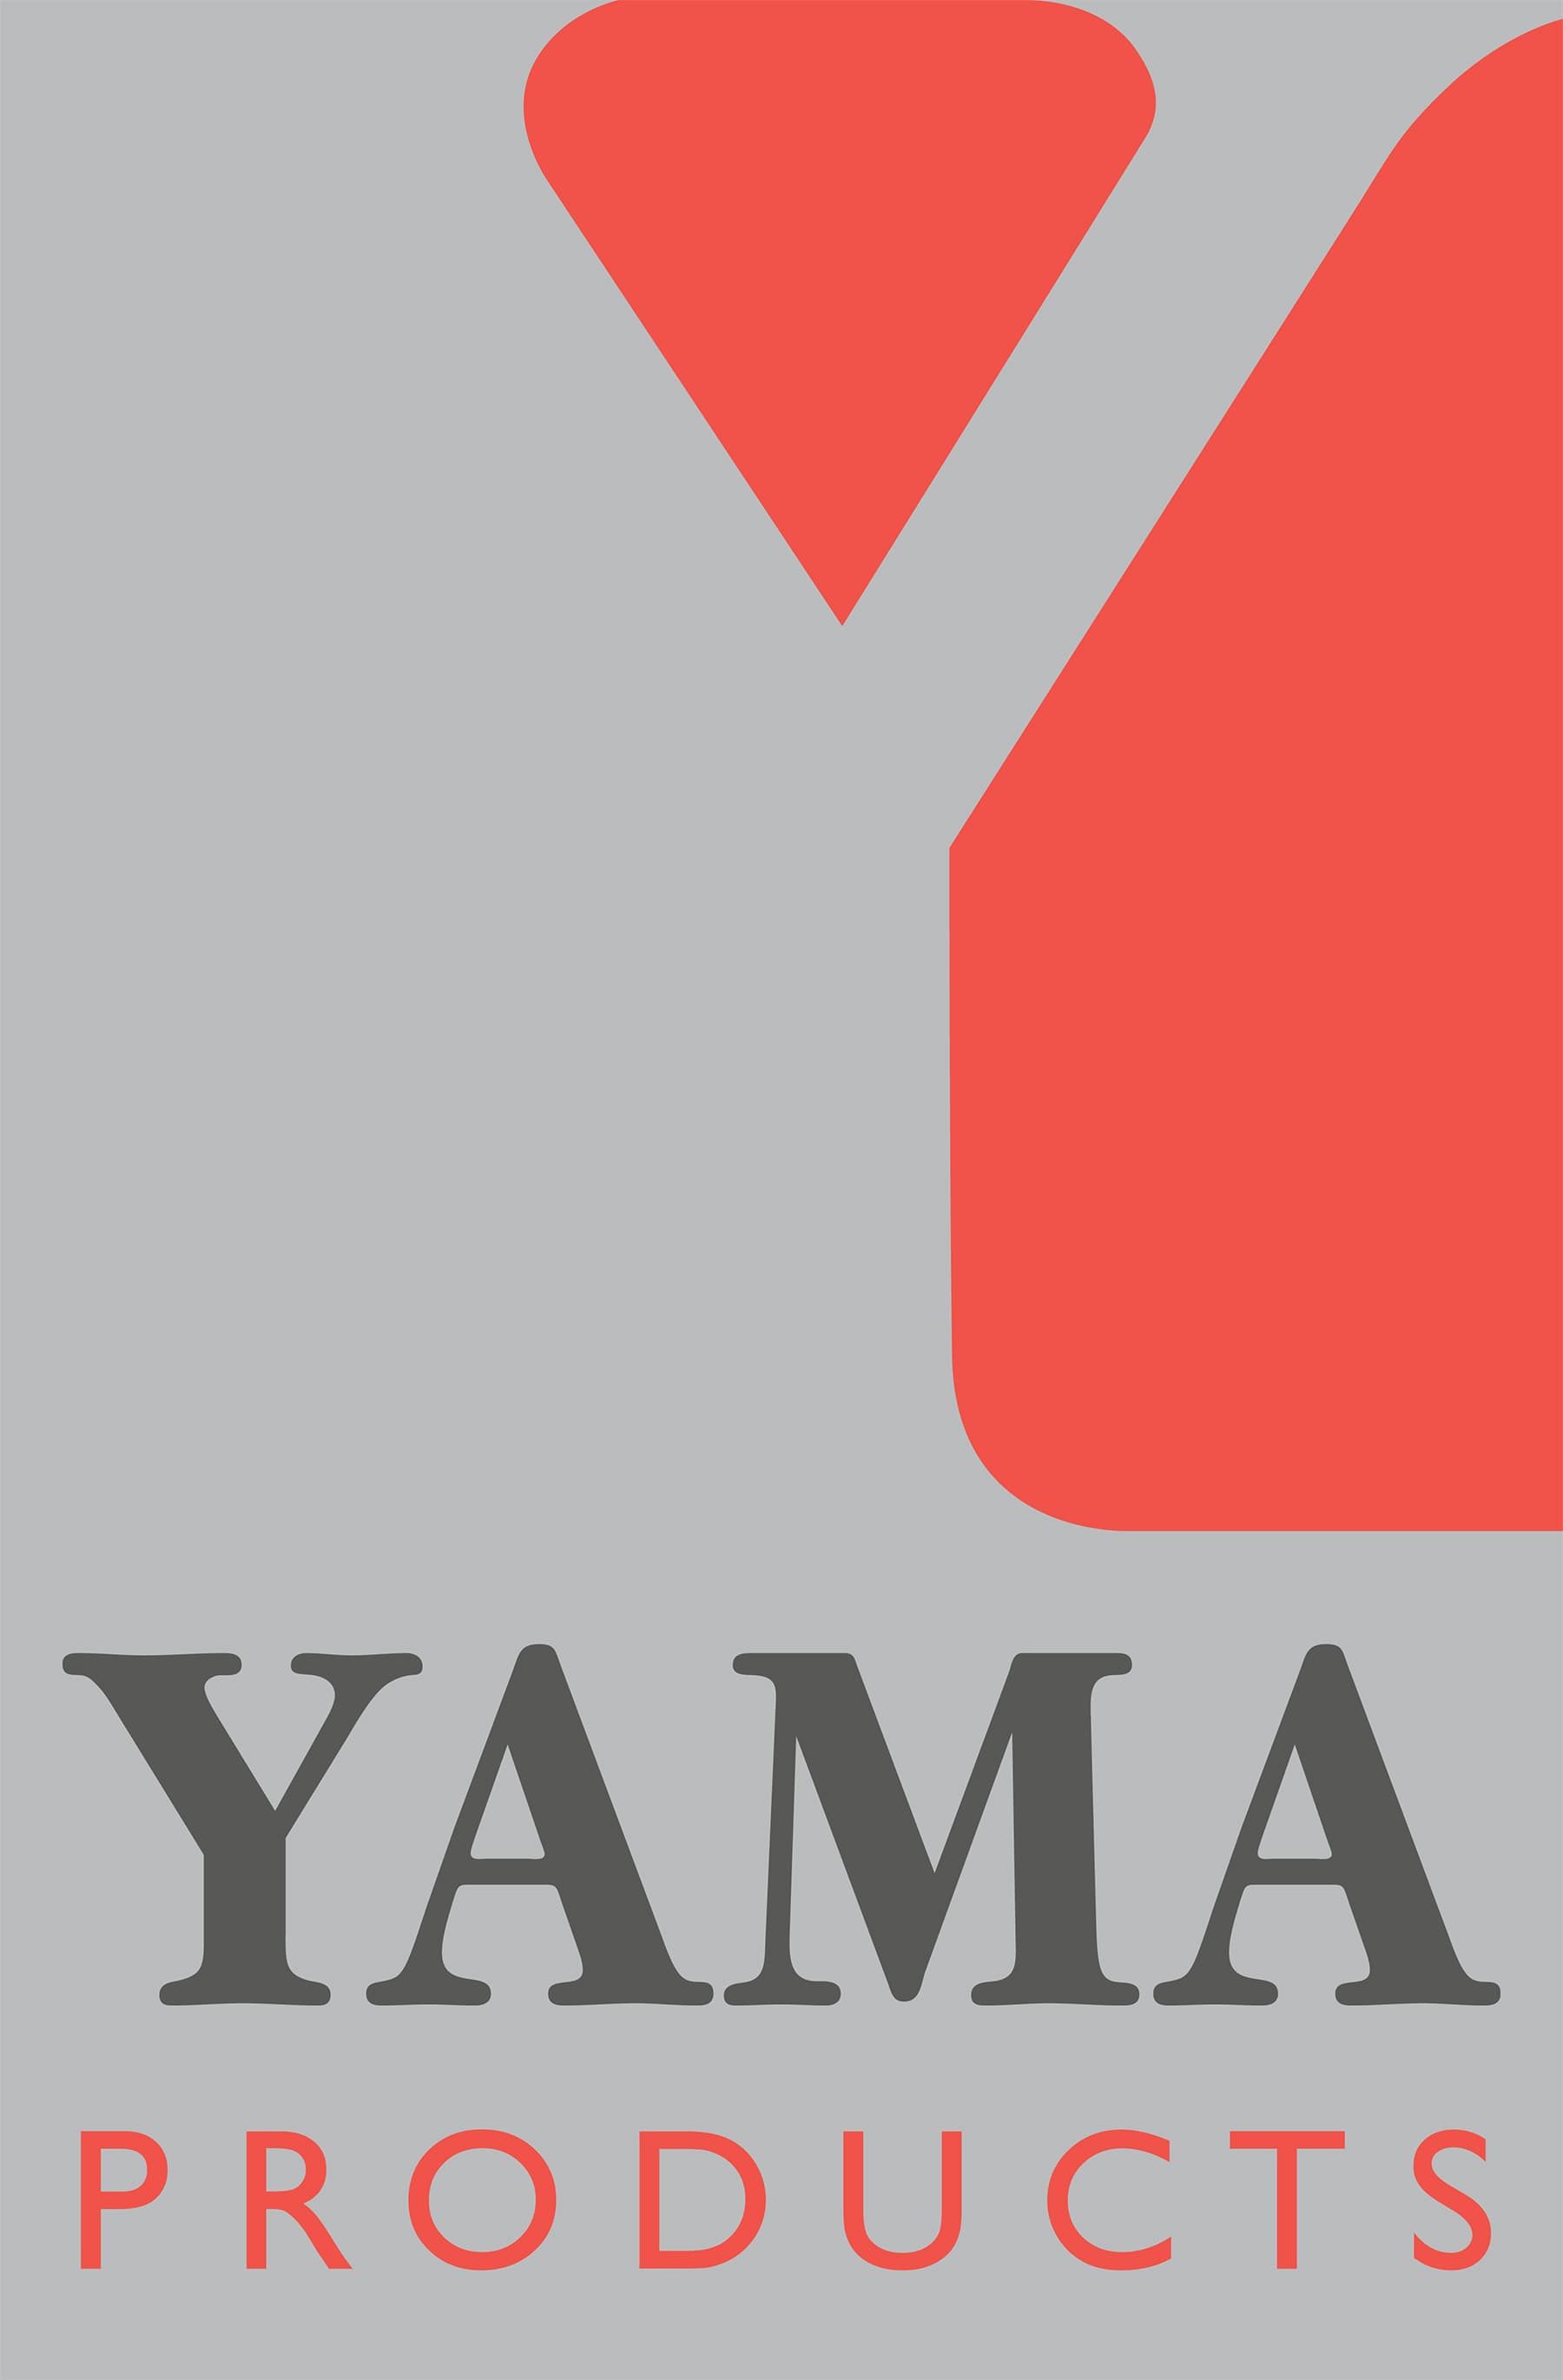 Yama Products B.V.